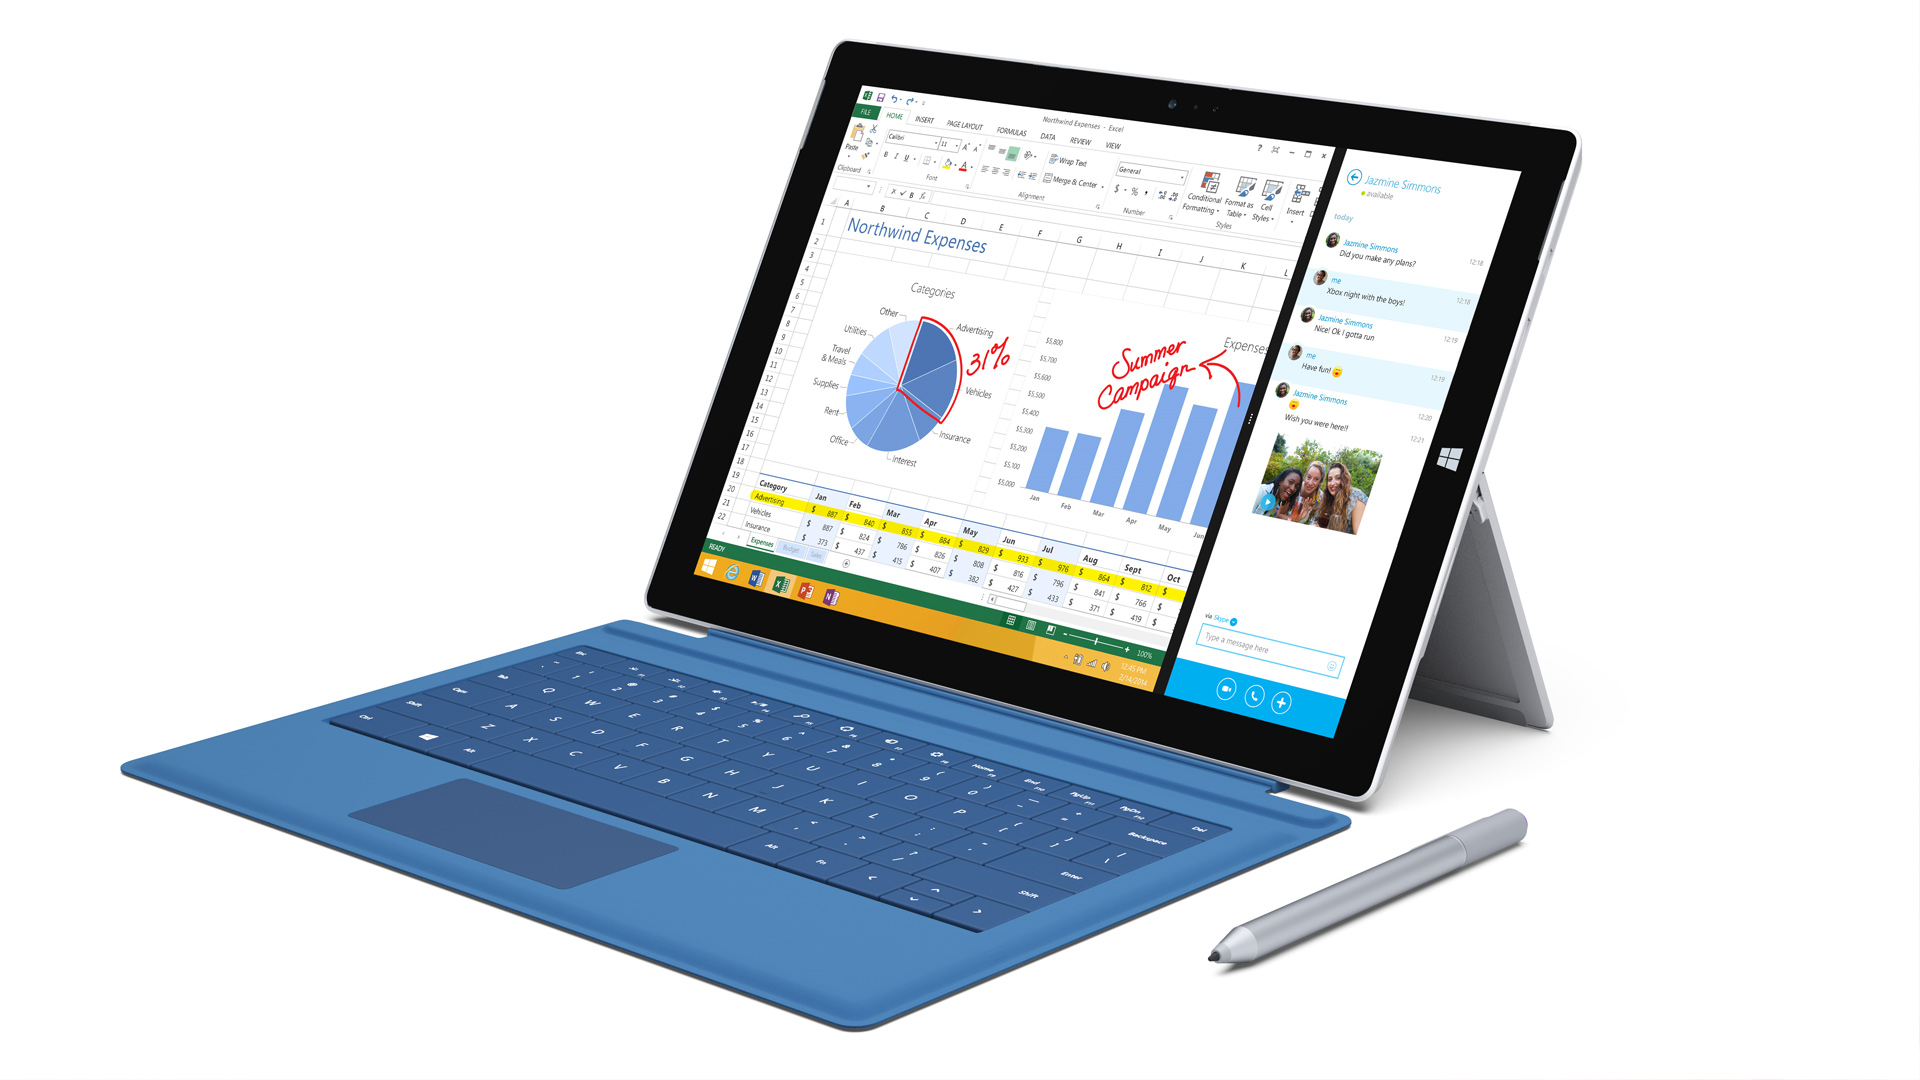 Microsoft Surface Pro 3 AD